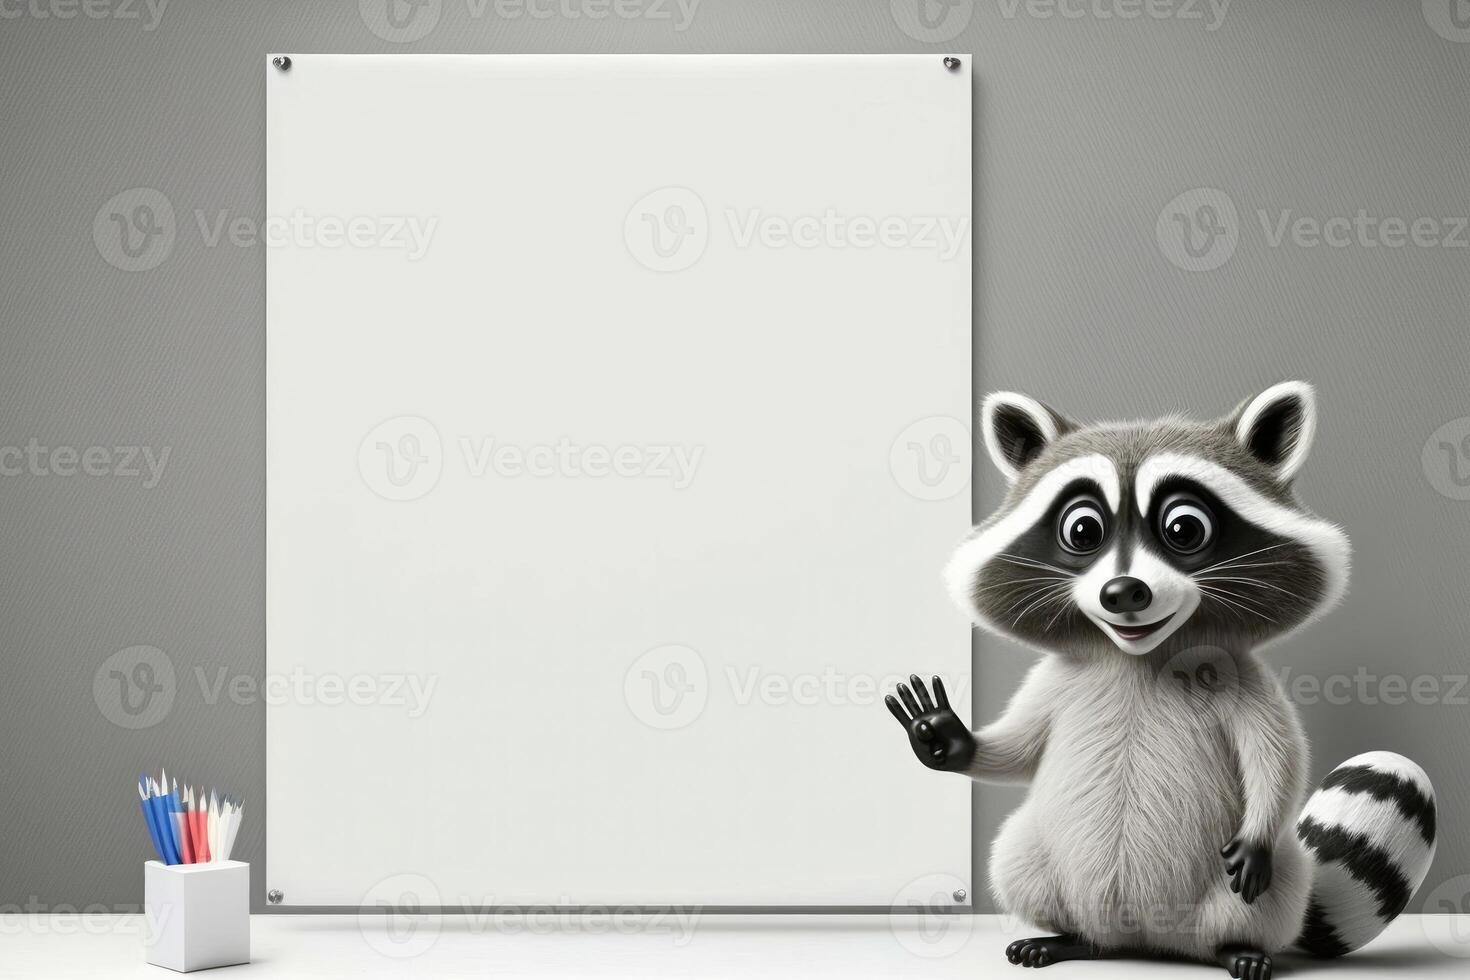 ai gegenereerd 3d schattig wasbeer tekenfilm staand naast blanco whiteboard. foto